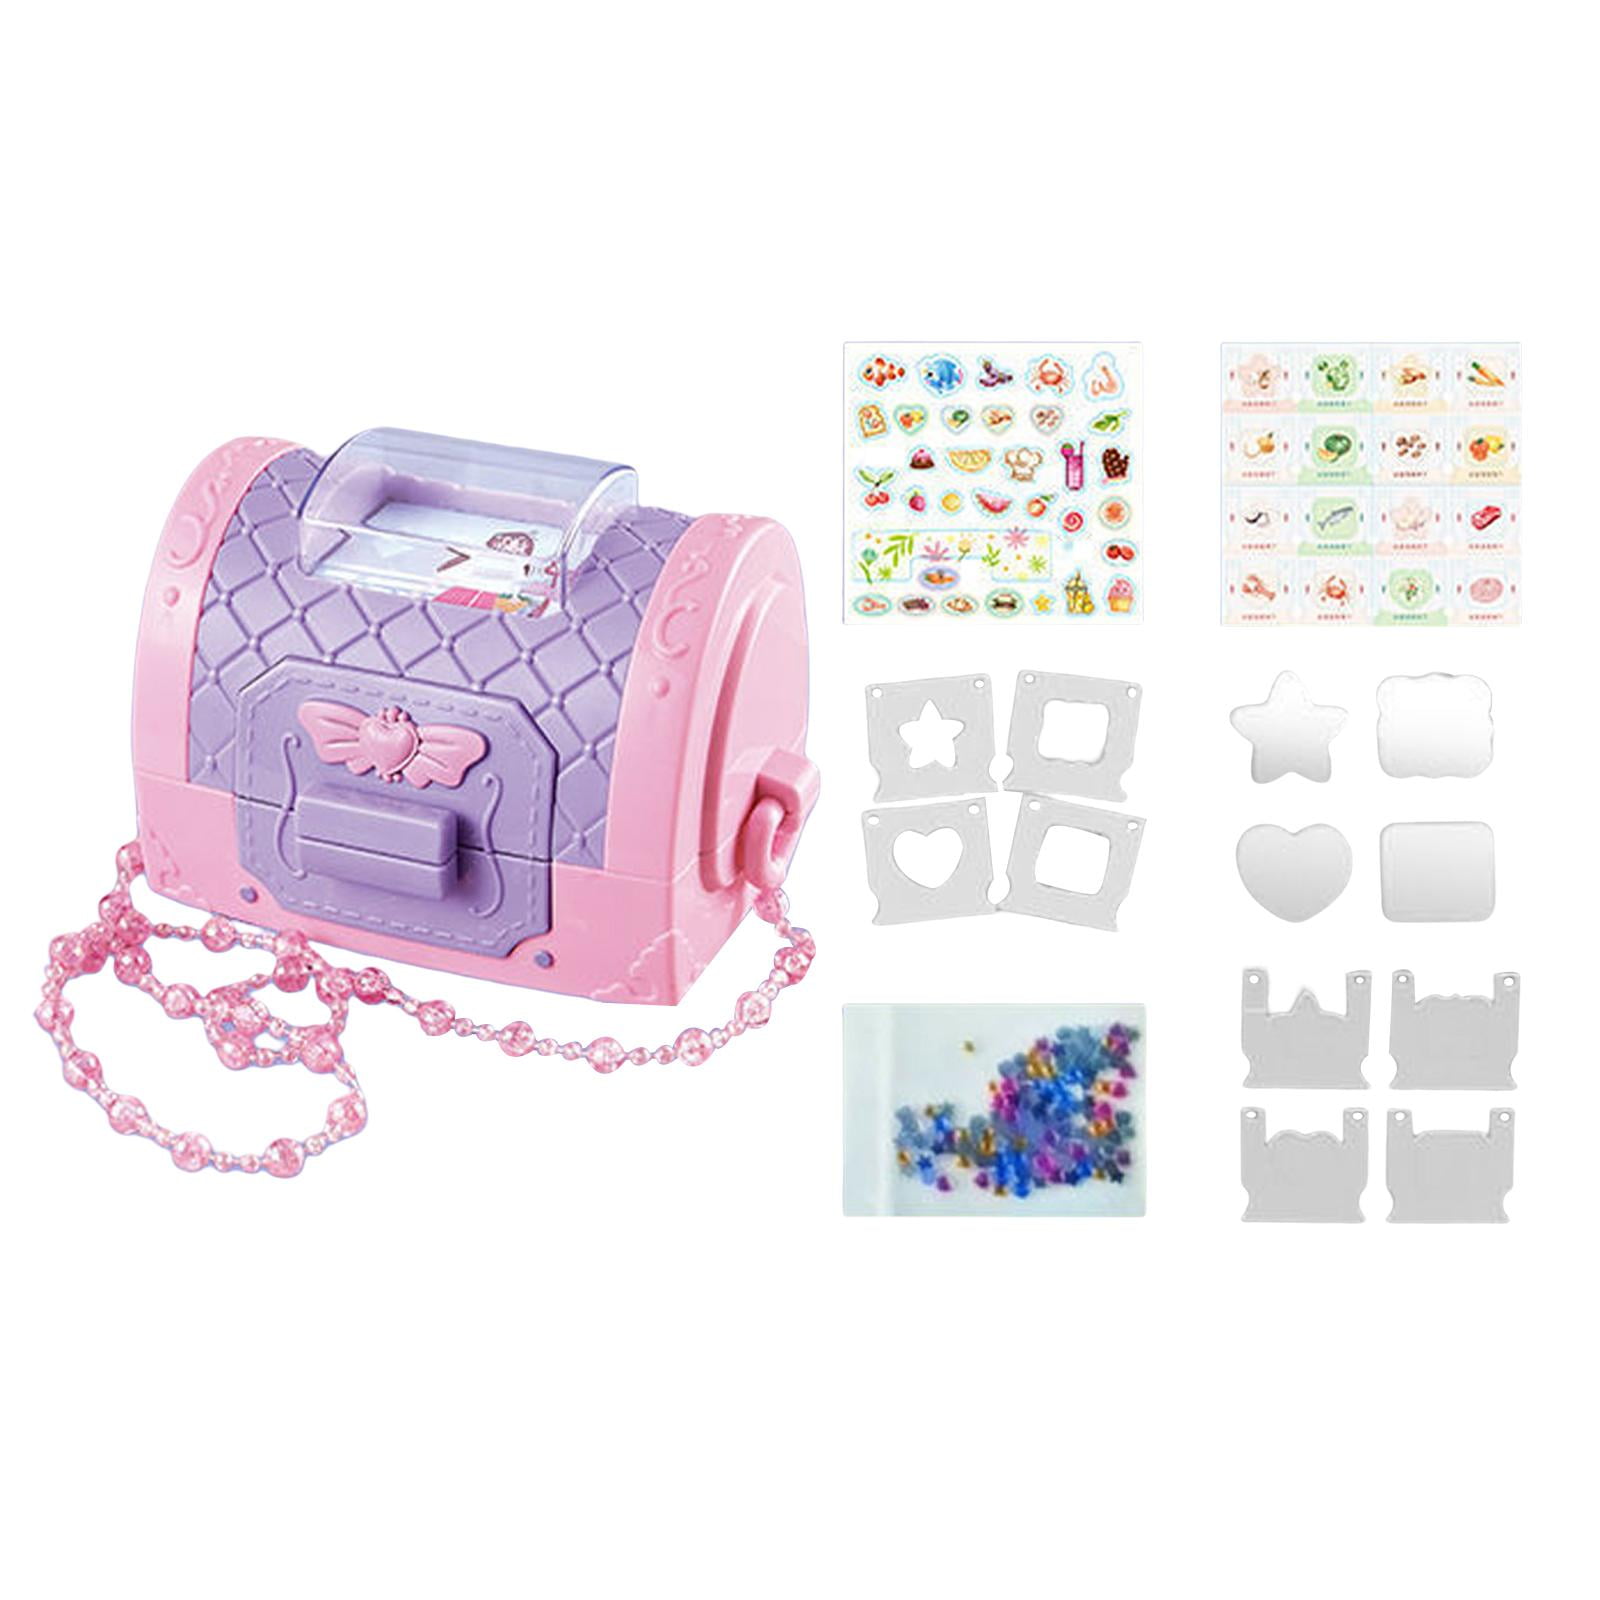 3D Sticker Maker Machine Magic Stickers Set Kids Handmade DIY Production  Girls Boys Children Birthday Gifts With Box